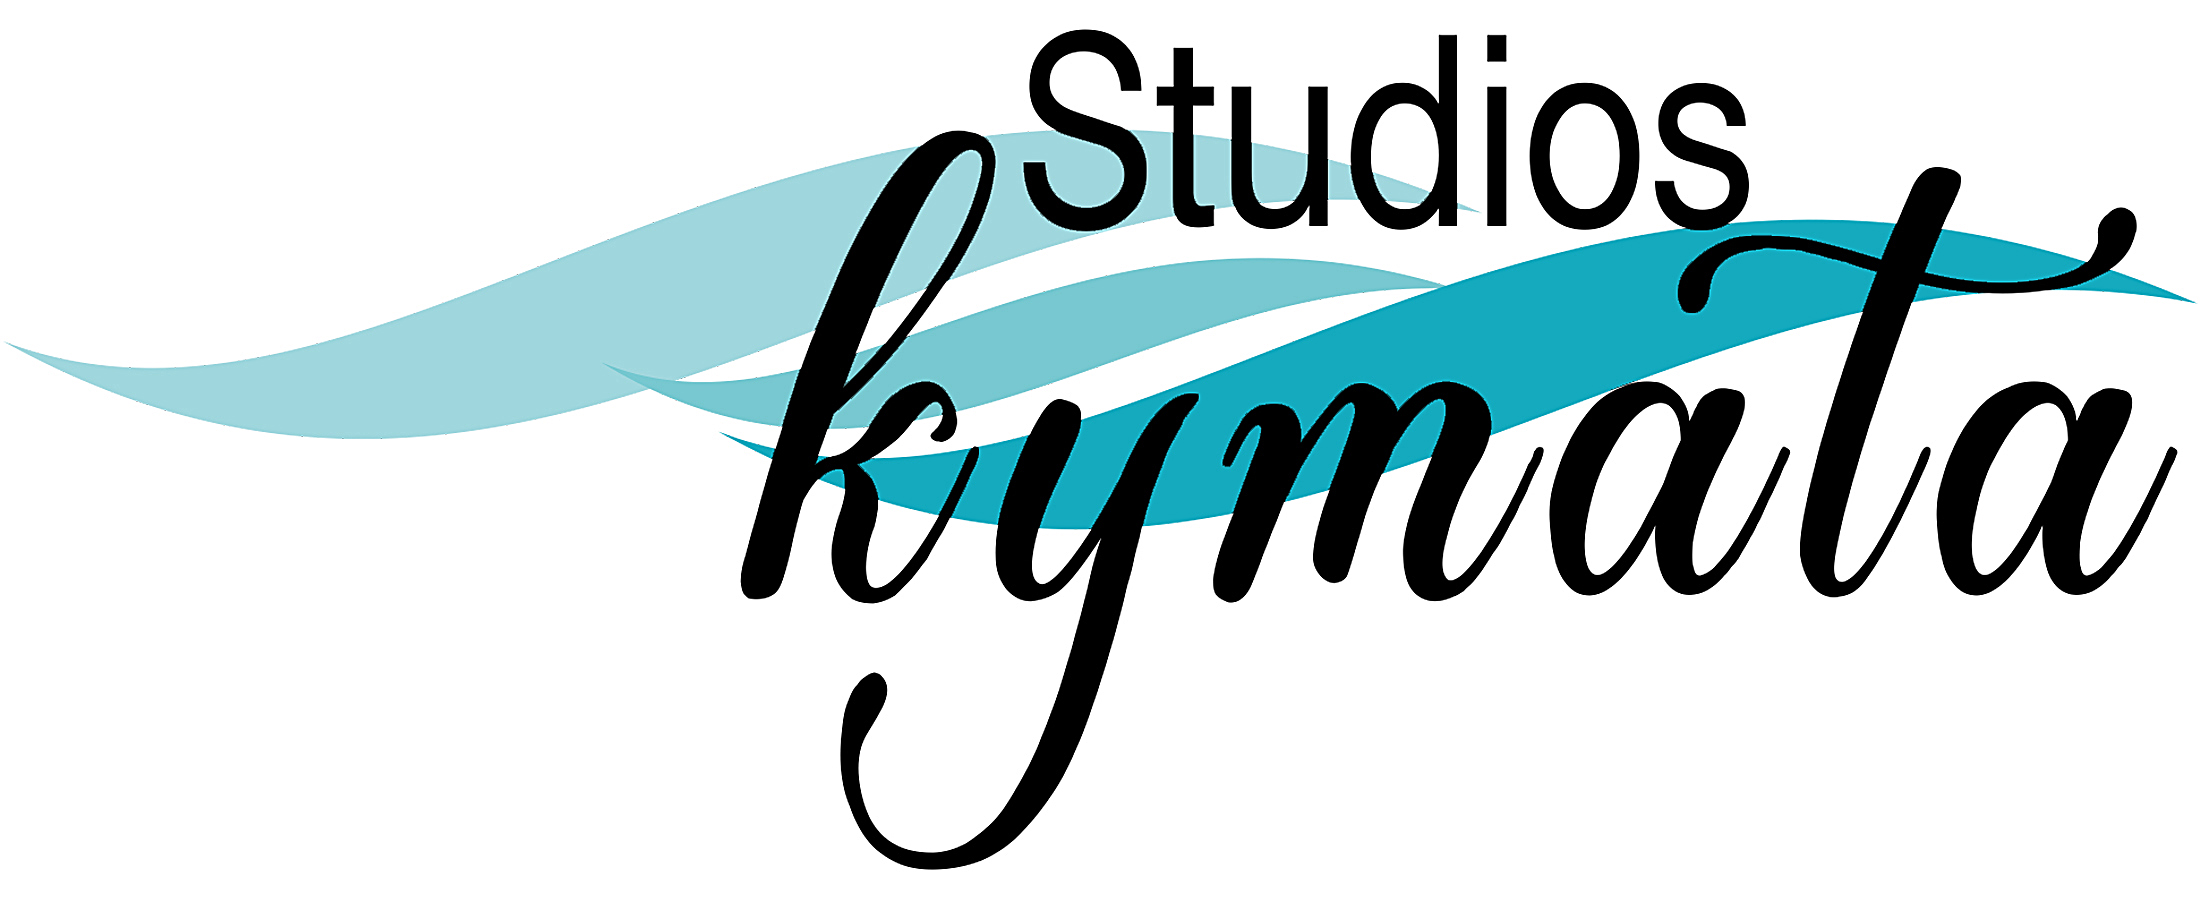 Studios Kymata